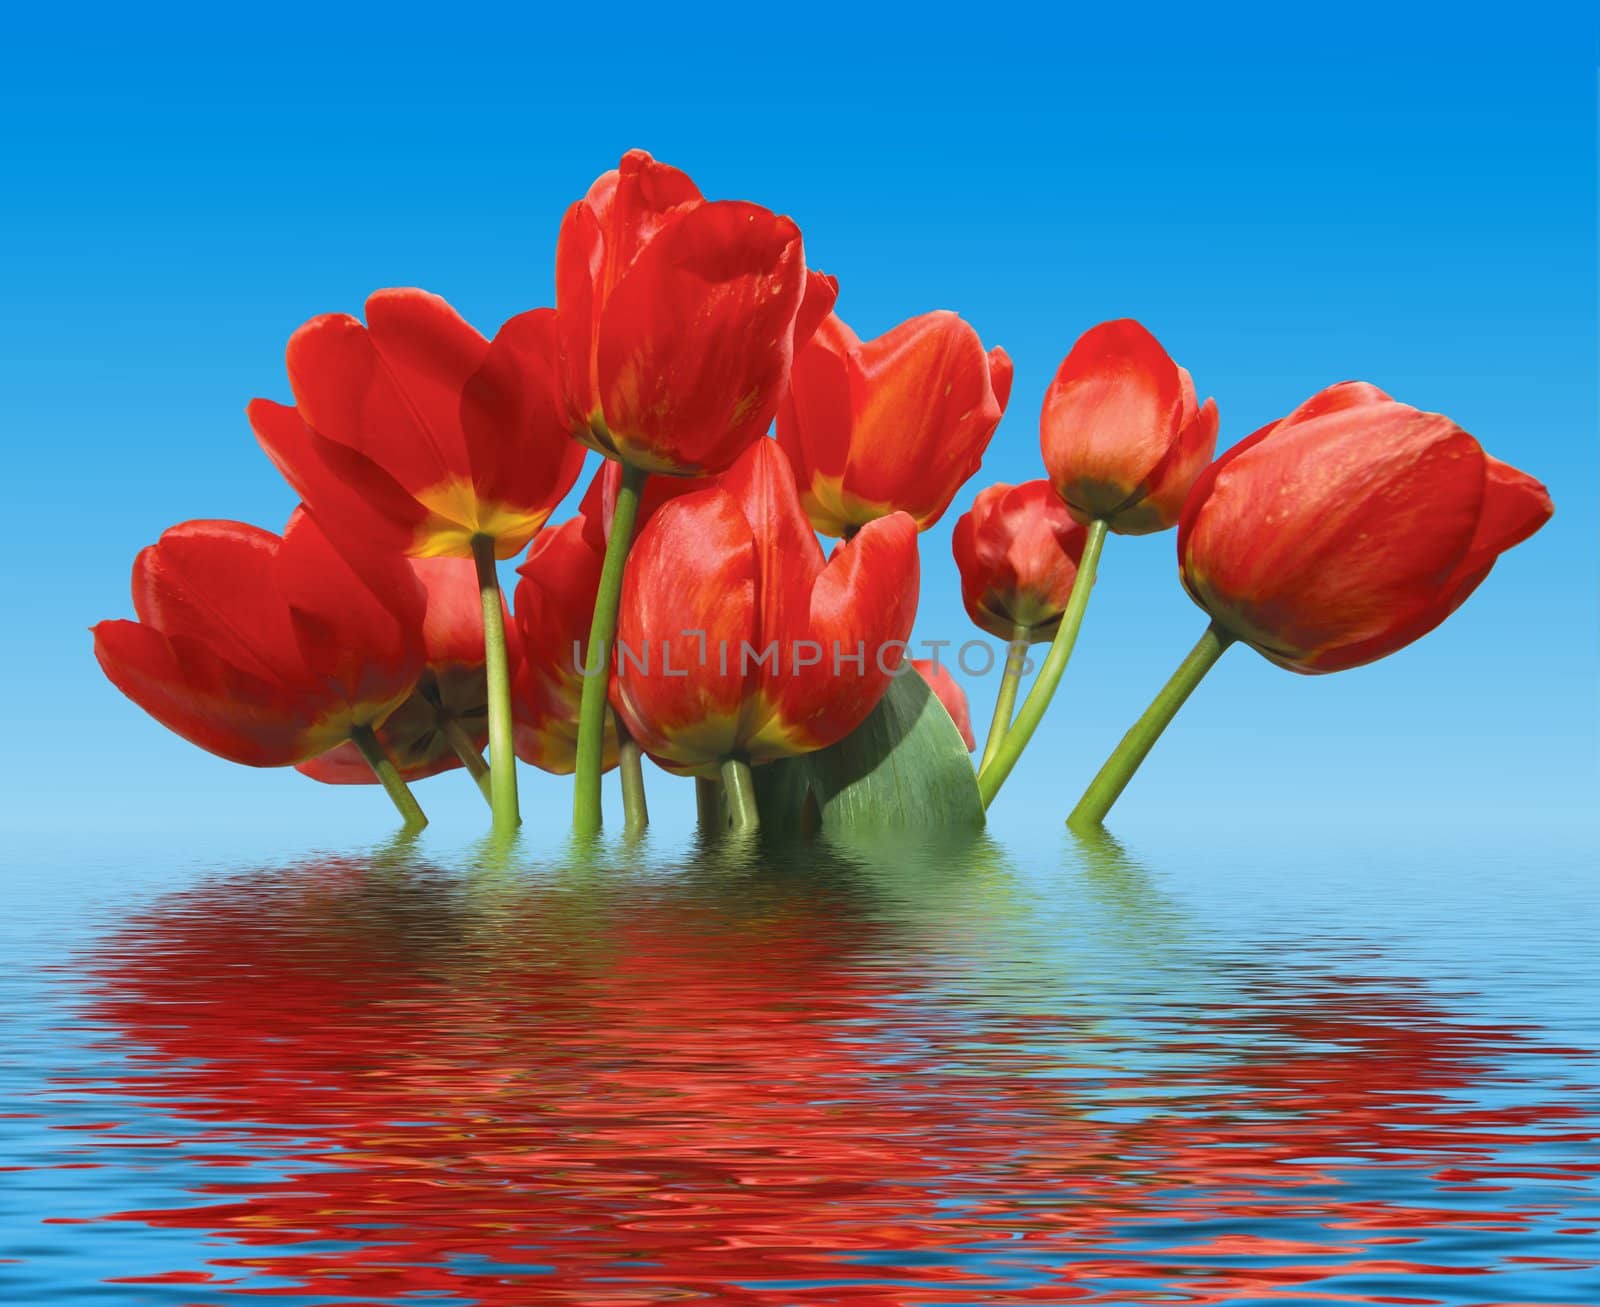 Reflection of tulips by velkol